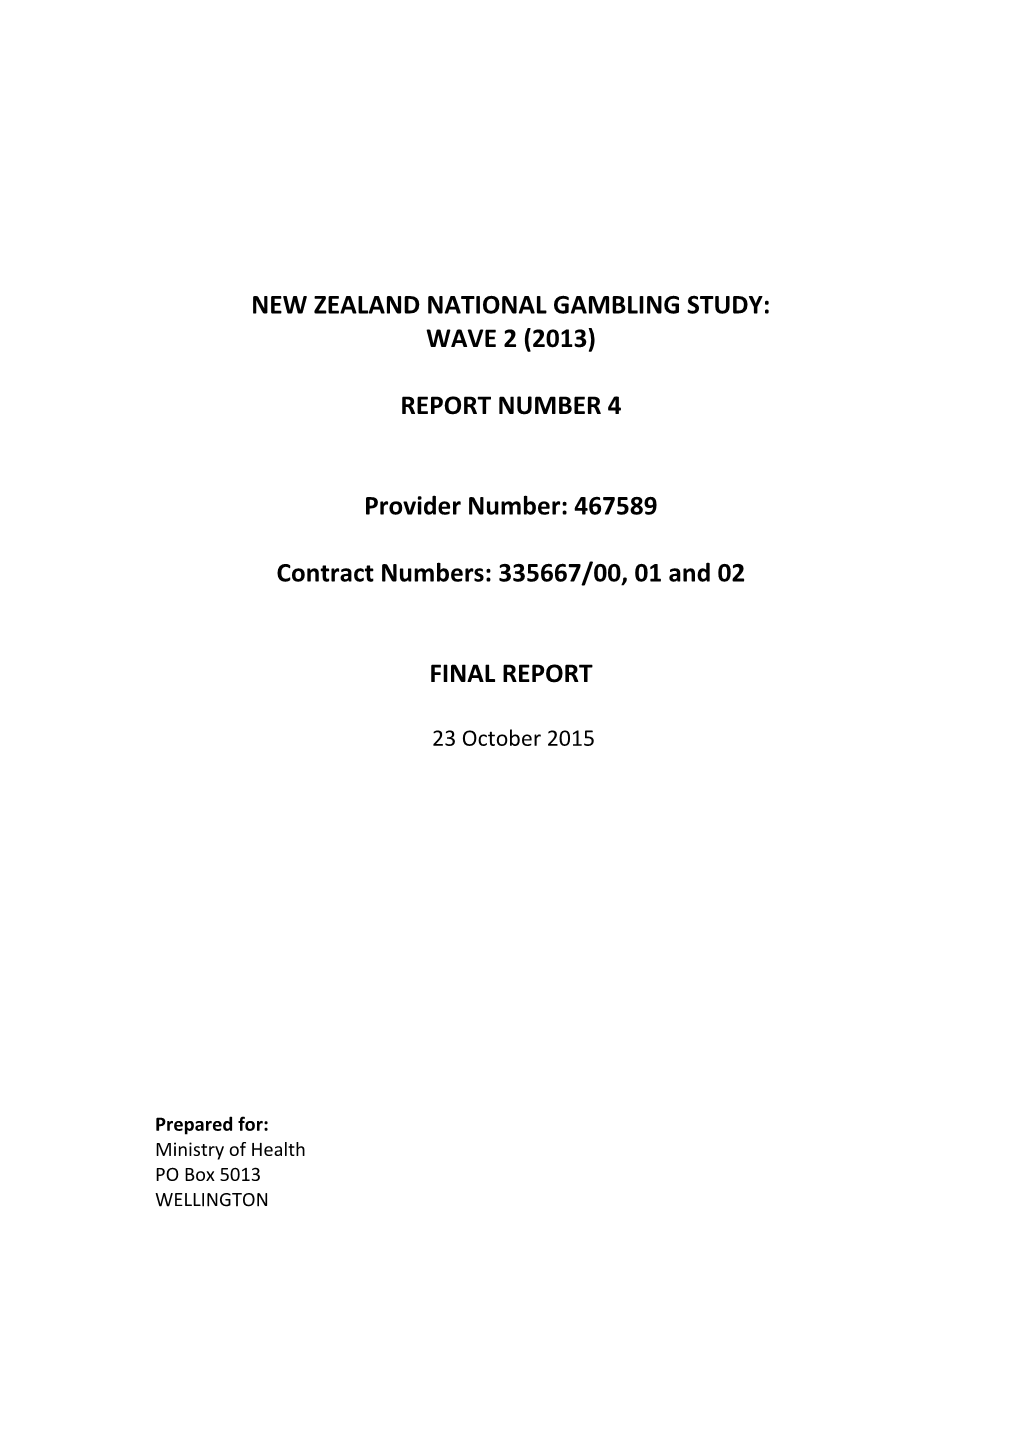 New Zealand National Gambling Study